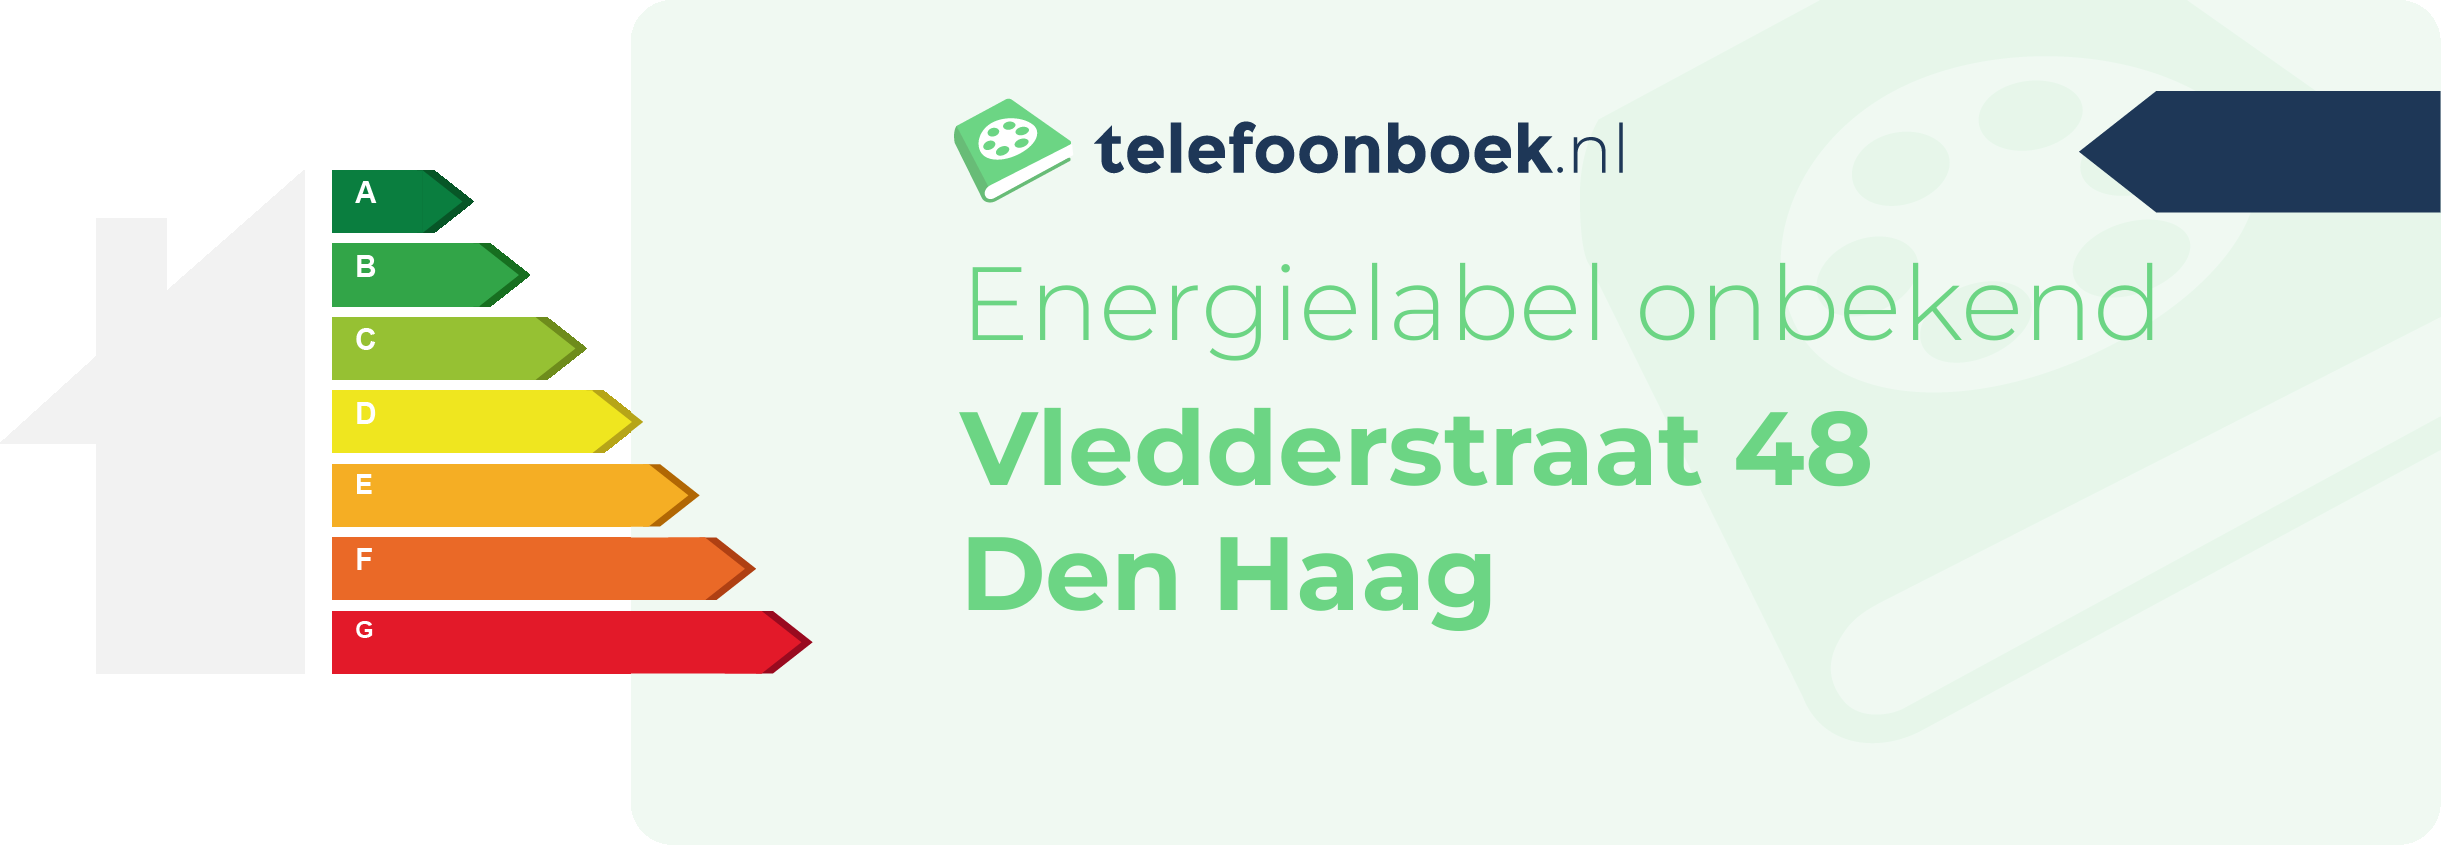 Energielabel Vledderstraat 48 Den Haag